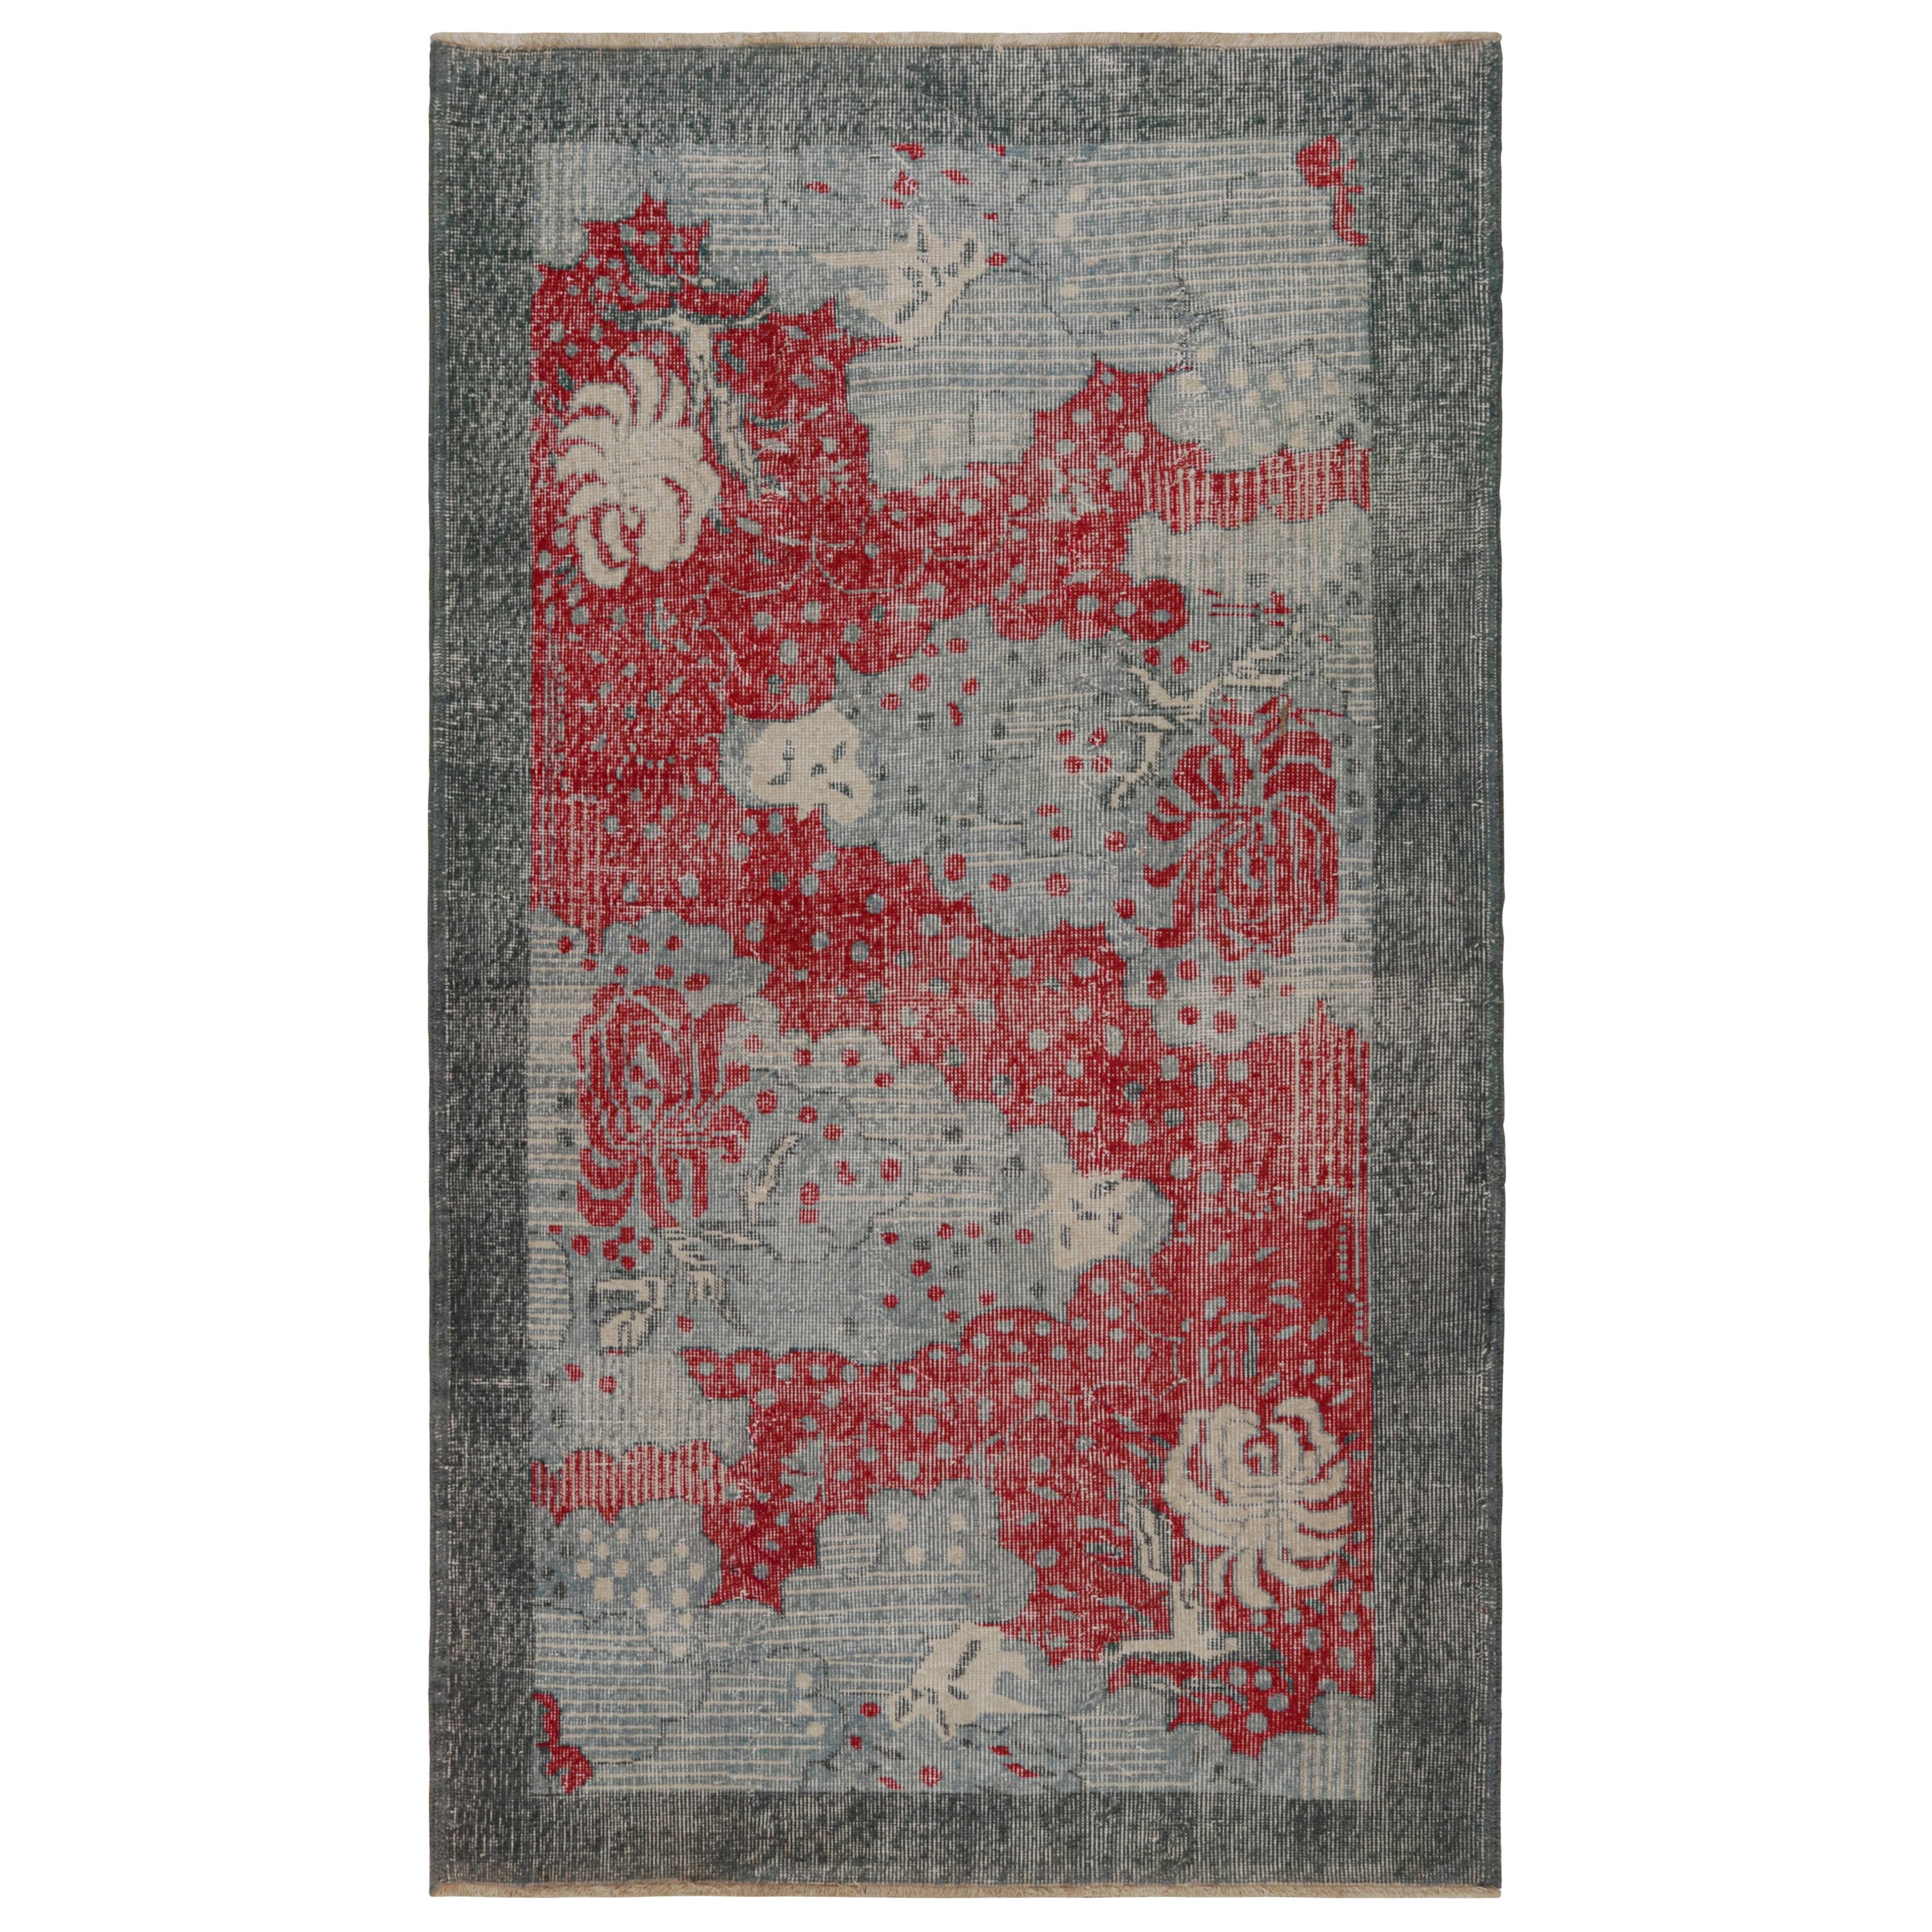 Vintage Zeki Müren Art Deco rug, with abstract patterns, from Rug & Kilim. For Sale